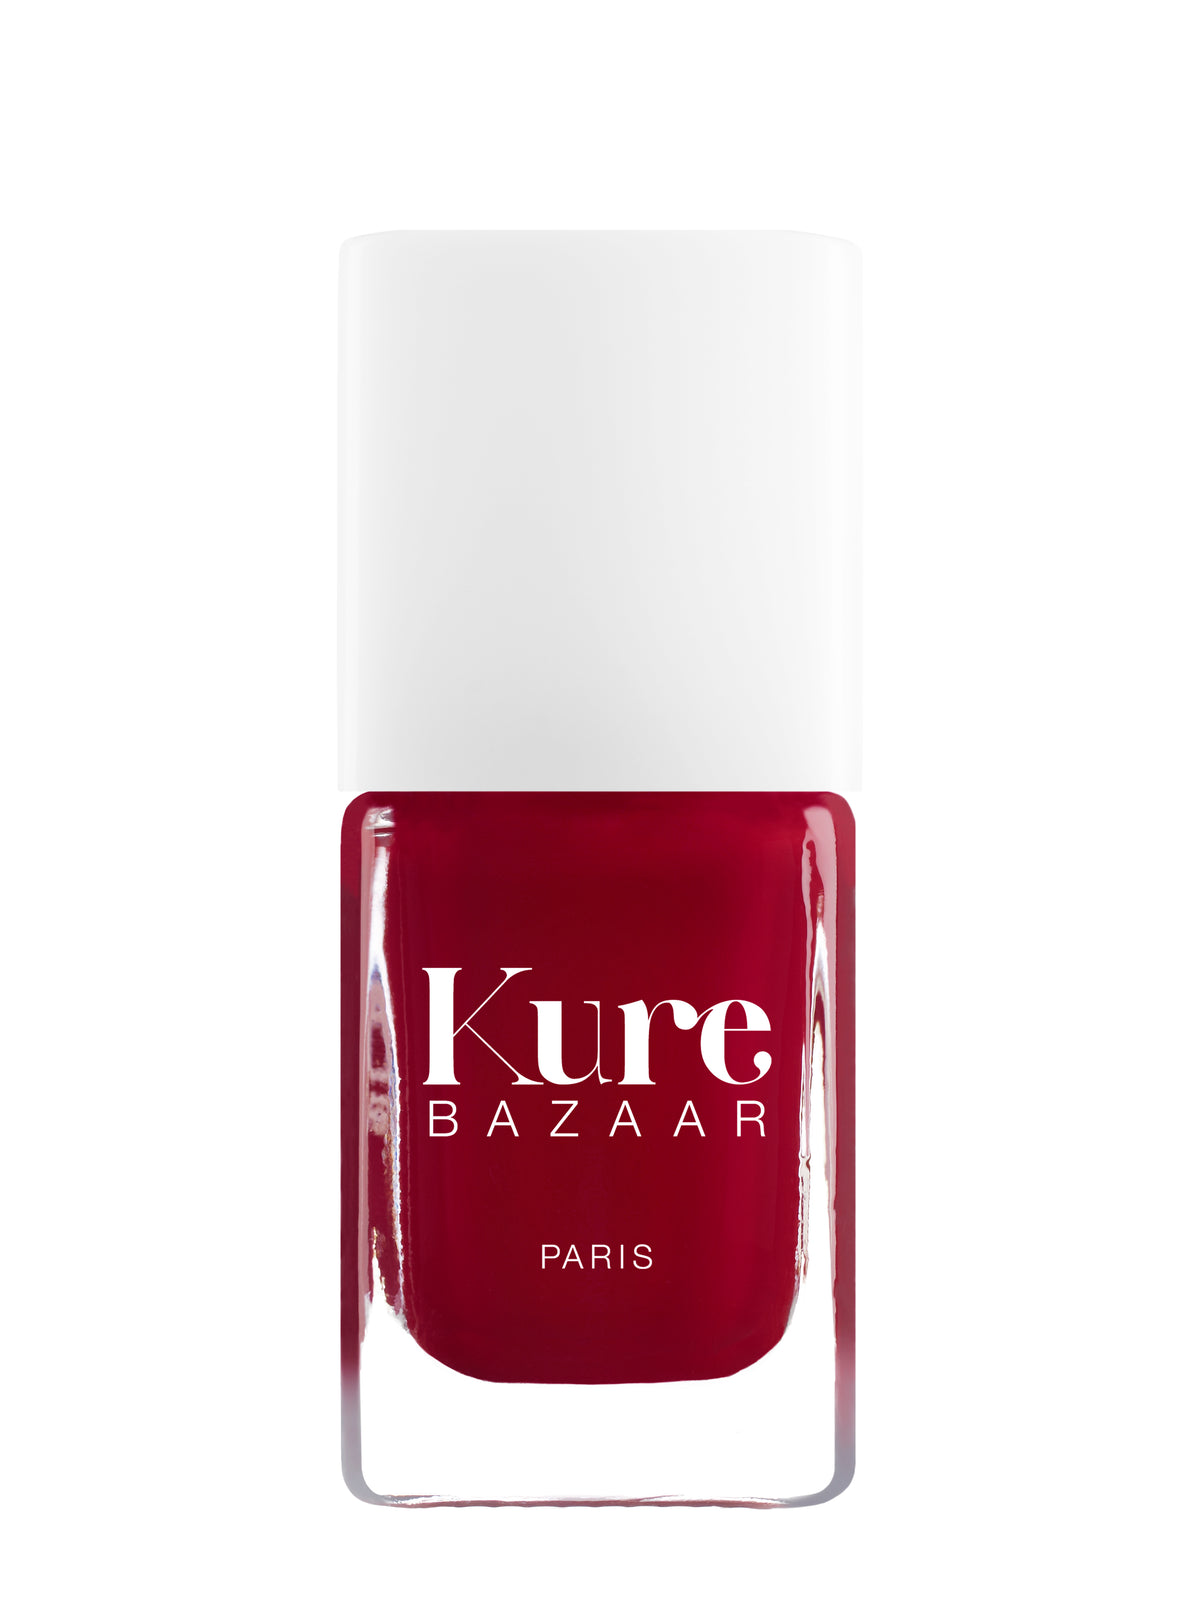 Kure Bazaar nail polish- Cherie